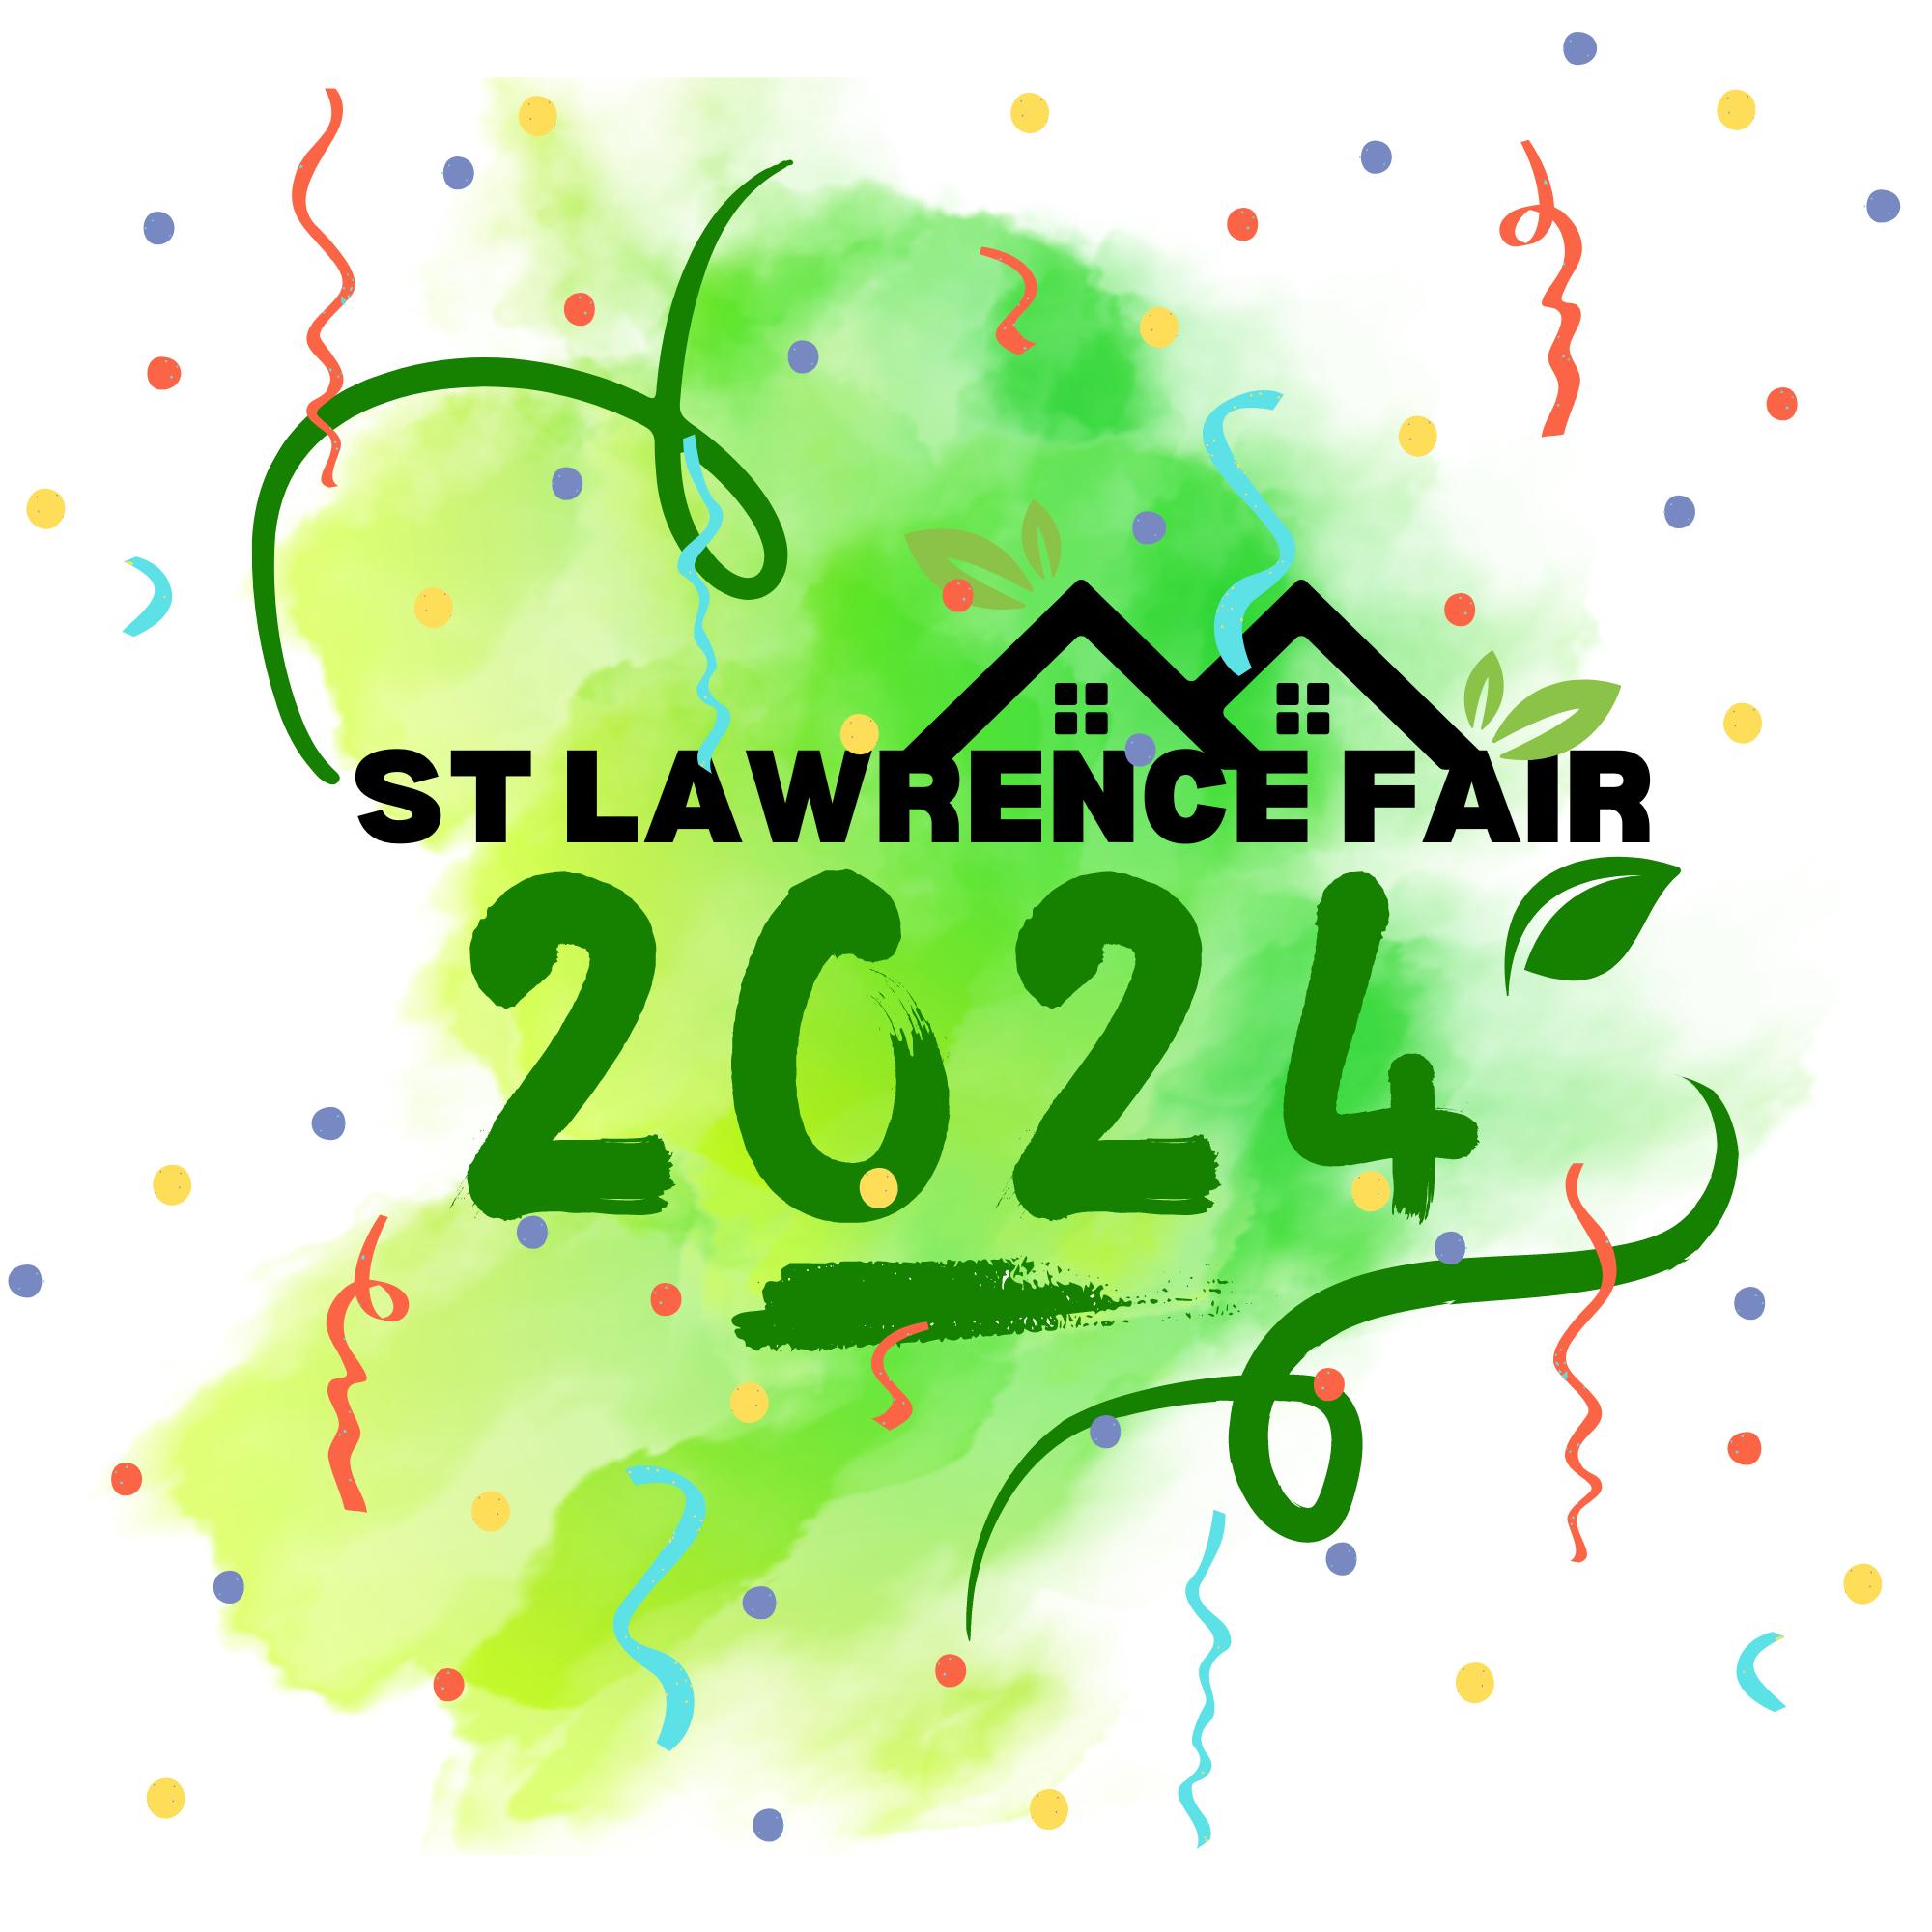 St Lawrence Fair 2024 St Lawrence Fair, Hurstpierpoint